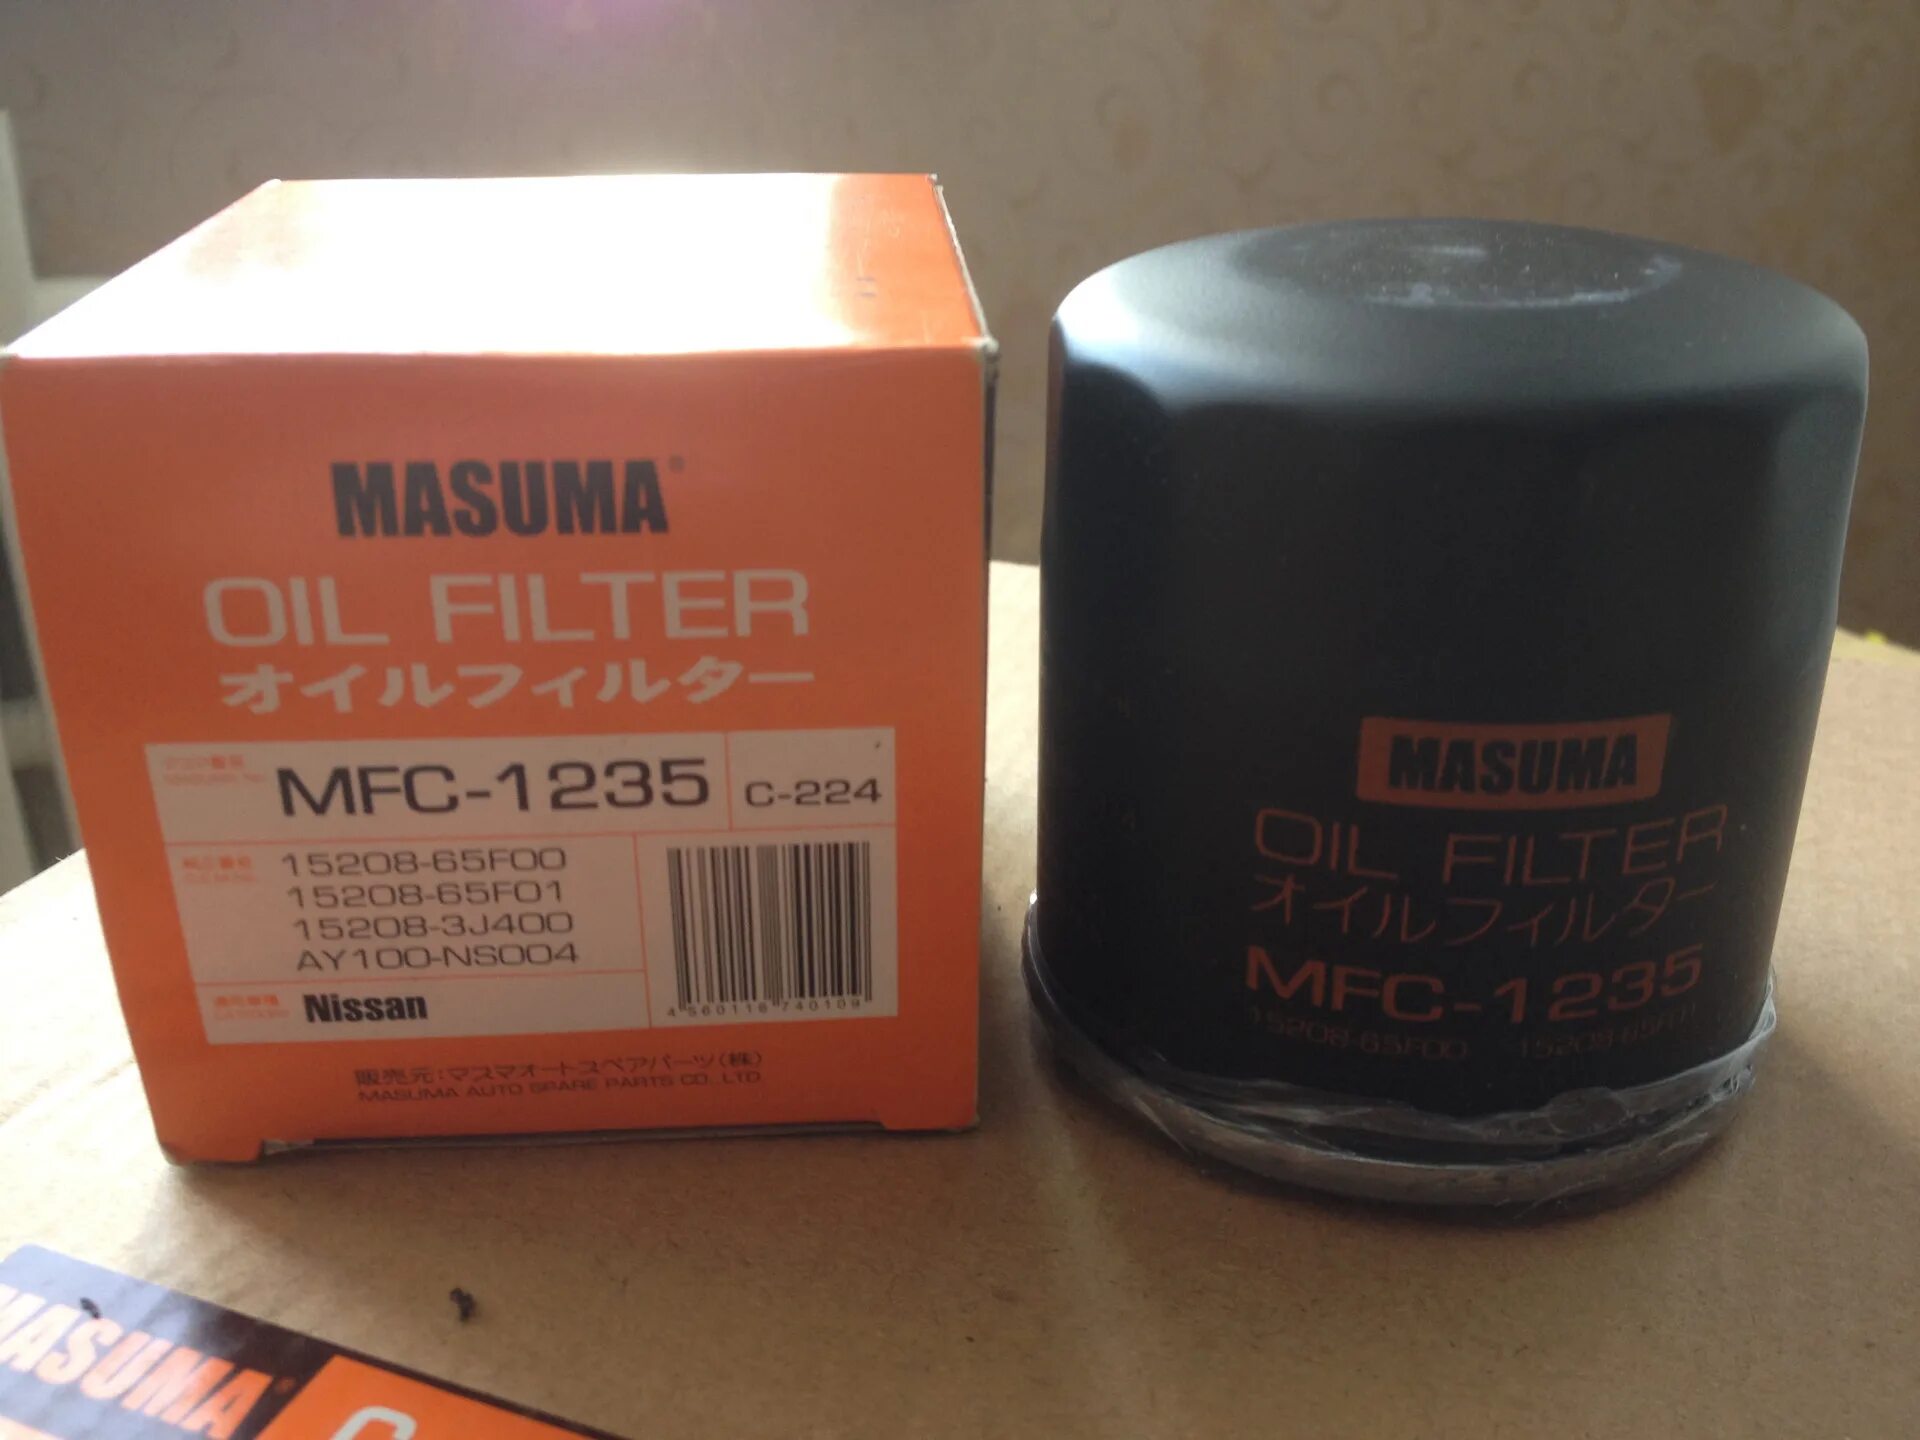 Masuma mfc1235 фильтр масляный. MFC-1235 Masuma. Масляный фильтр Renault Masuma mfc1235. Masuma mfc1318 фильтр масляный.